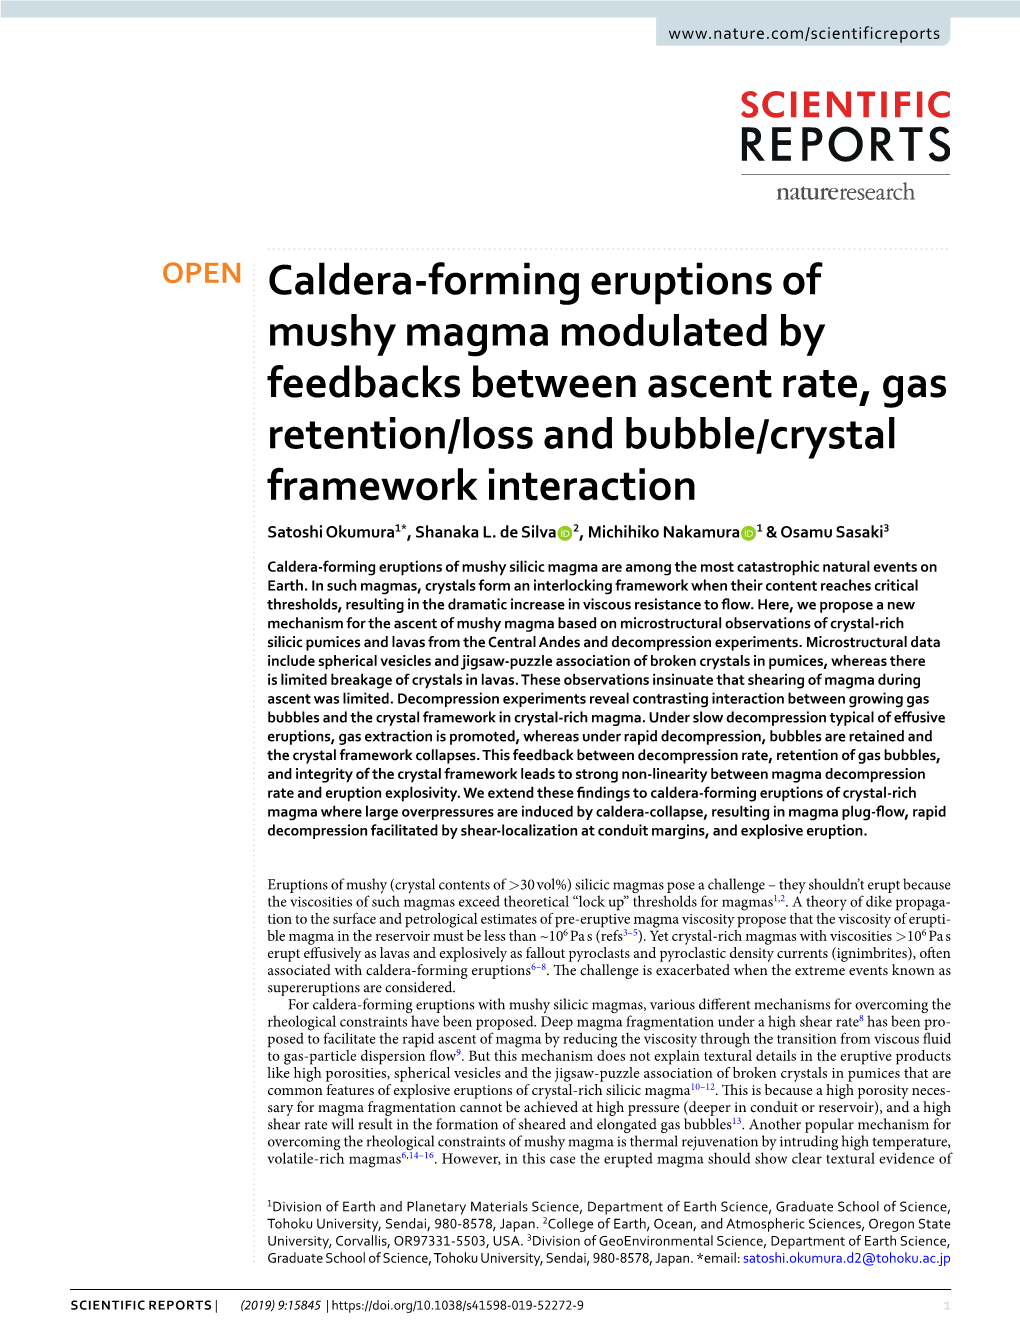 Caldera-Forming Eruptions of Mushy Magma Modulated By